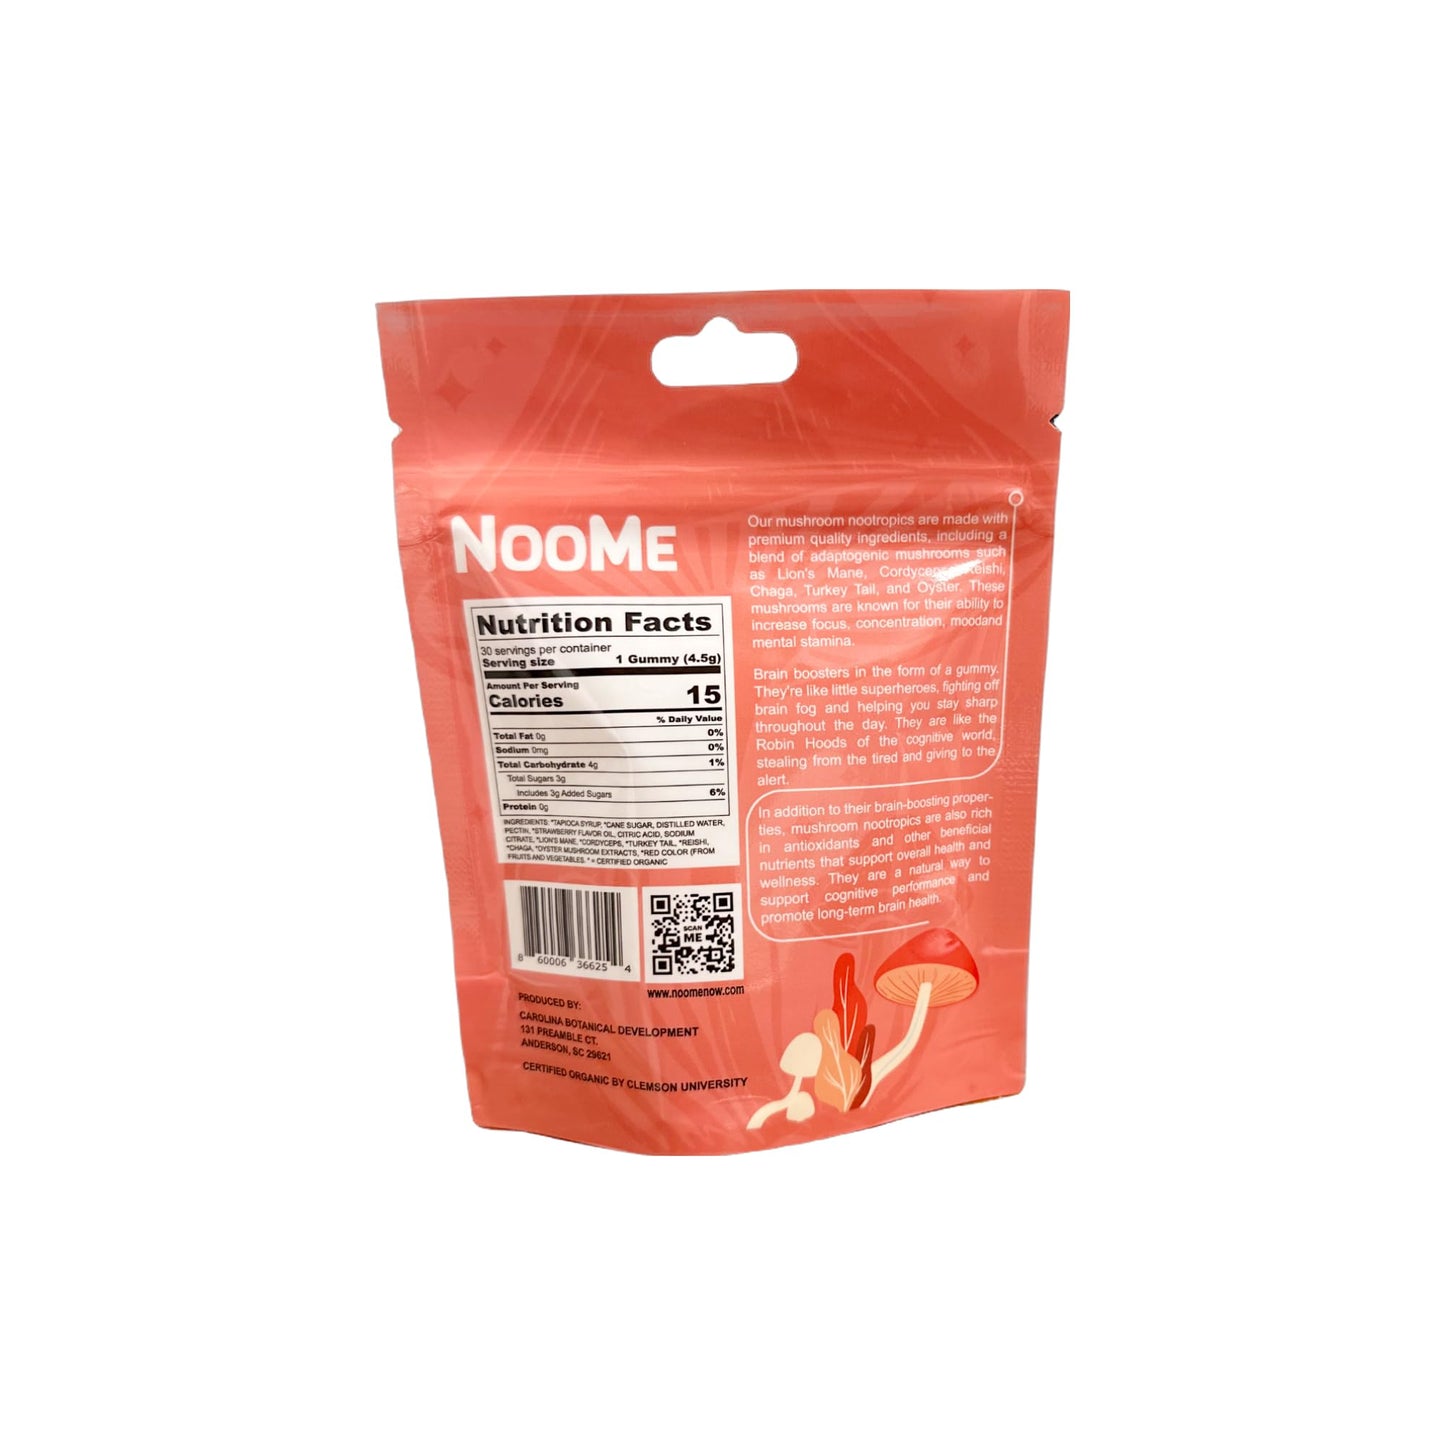 NooMe Organic Nootropic Mushroom Gummies Vegan Kosher 30ct Daily Bites - Lions Mane, Cordyceps, Turkey Tail, Reishi, Chaga, Oyster Mushrooms - Immune and Cognitive Support, (30 Gummies)